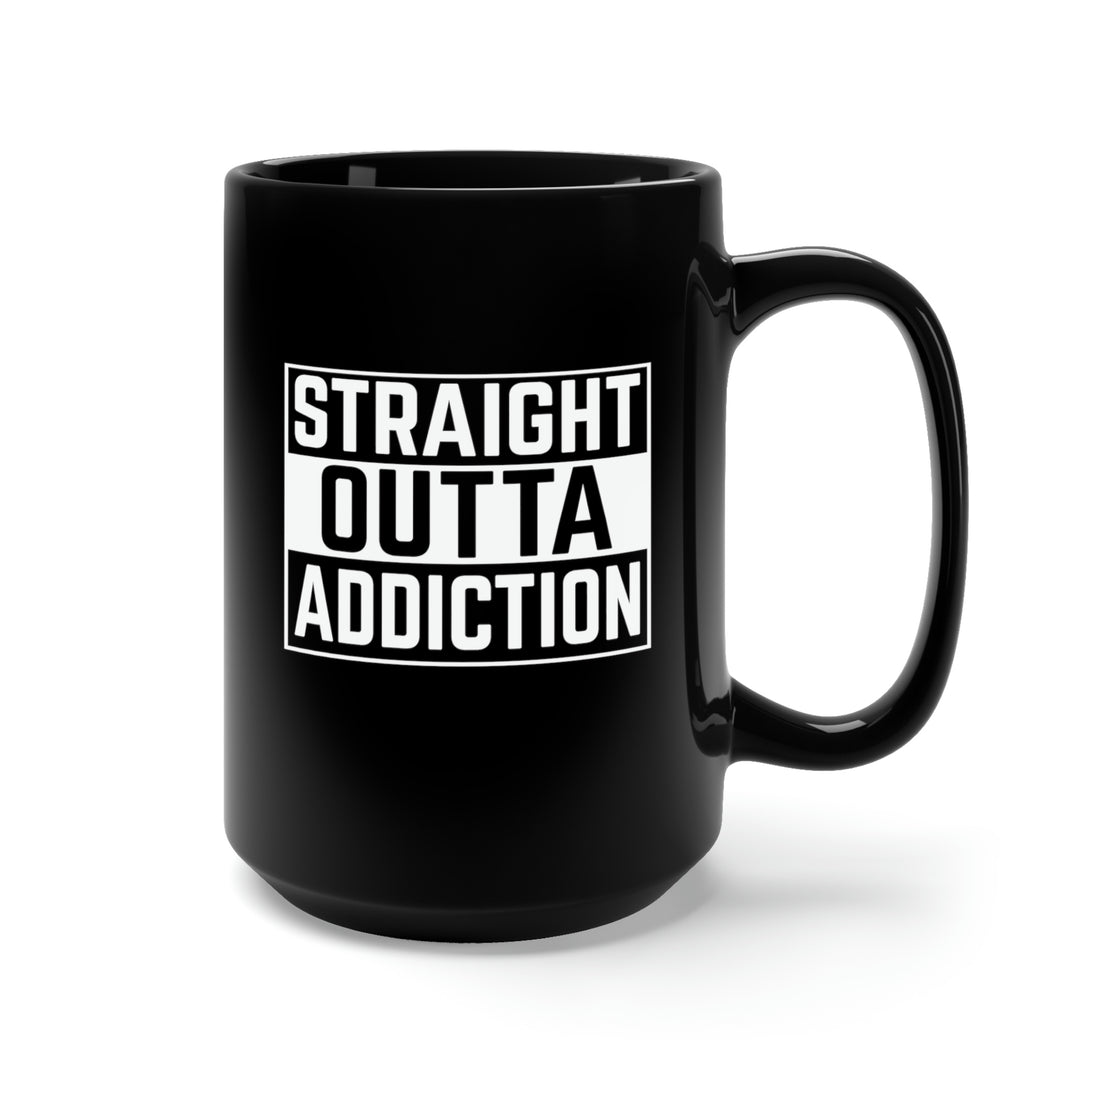 Straight Outta Addiction - Large 15oz Black Mug